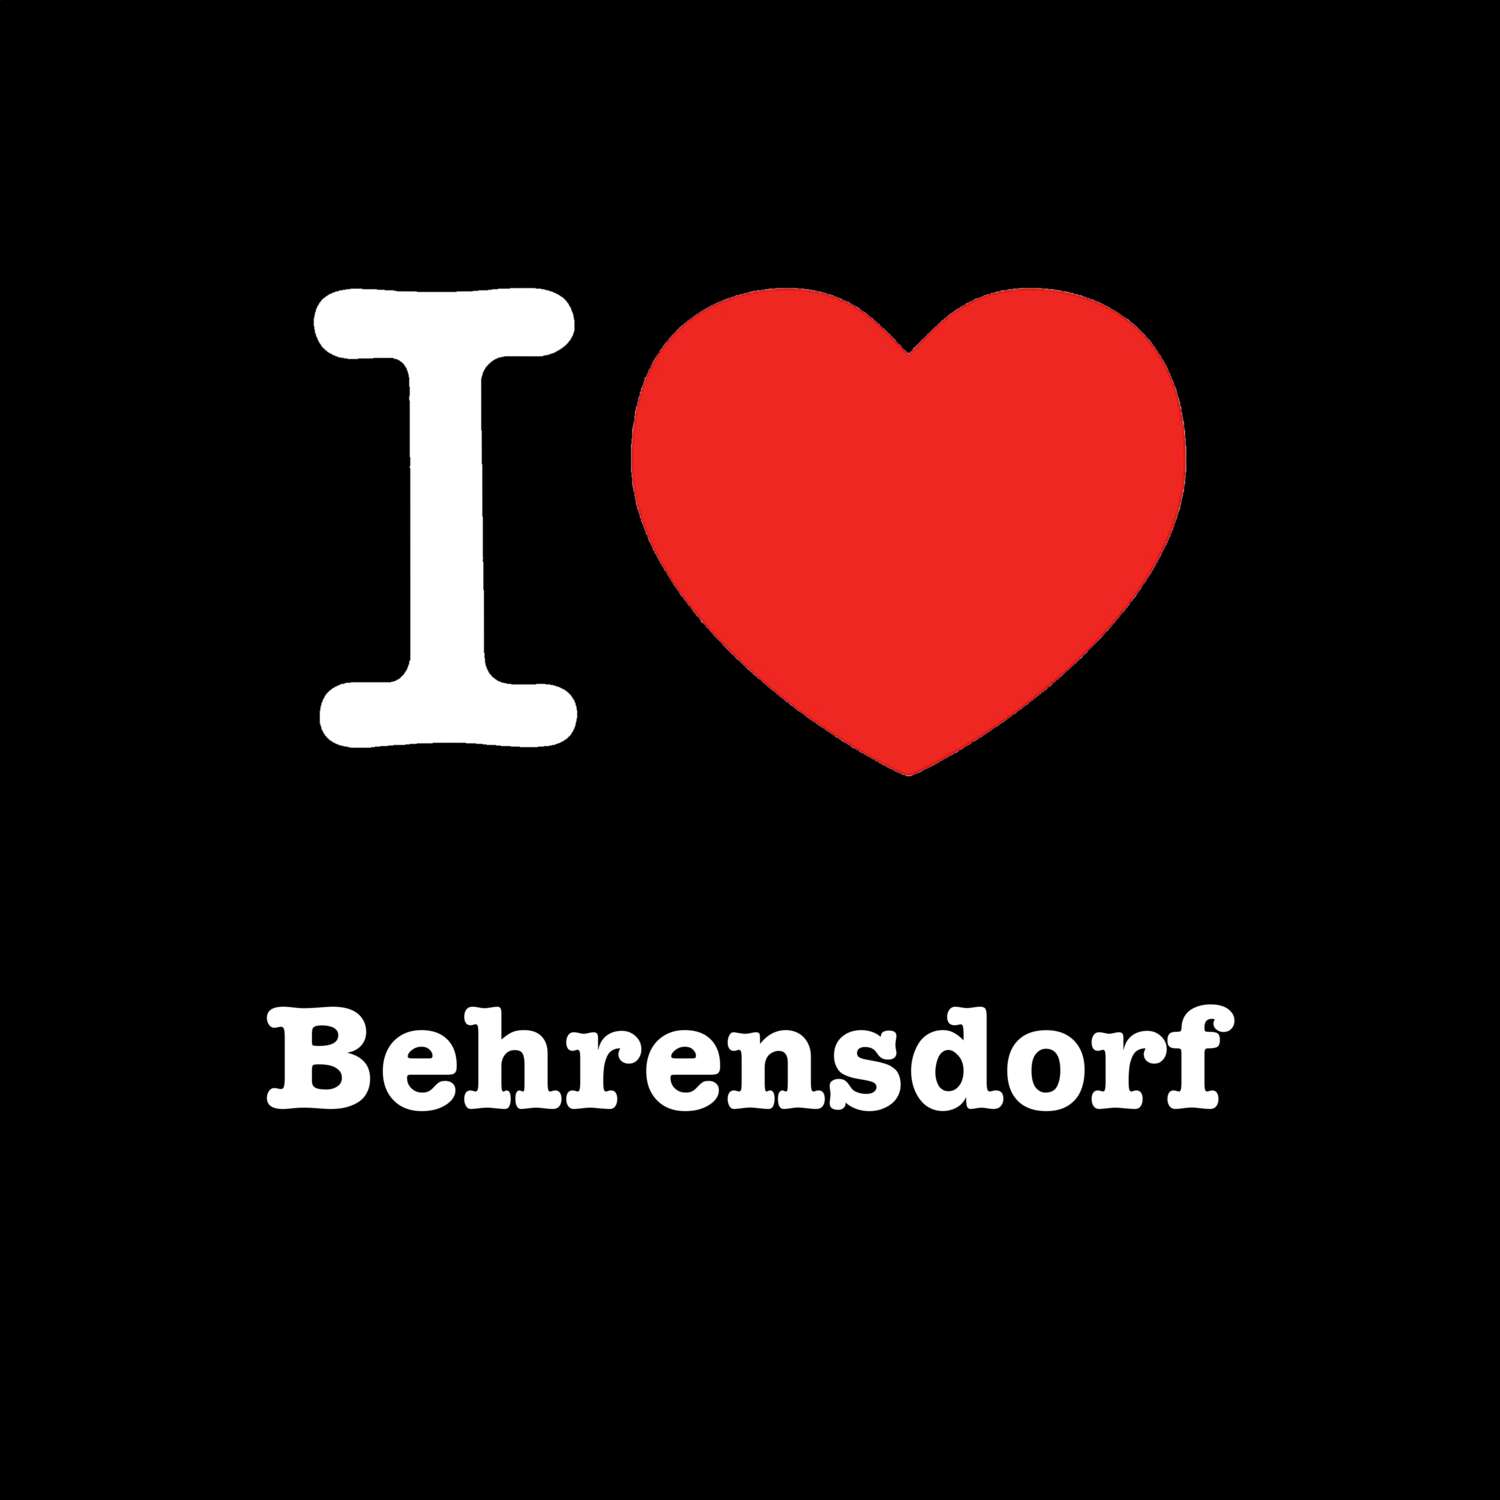 Behrensdorf T-Shirt »I love«